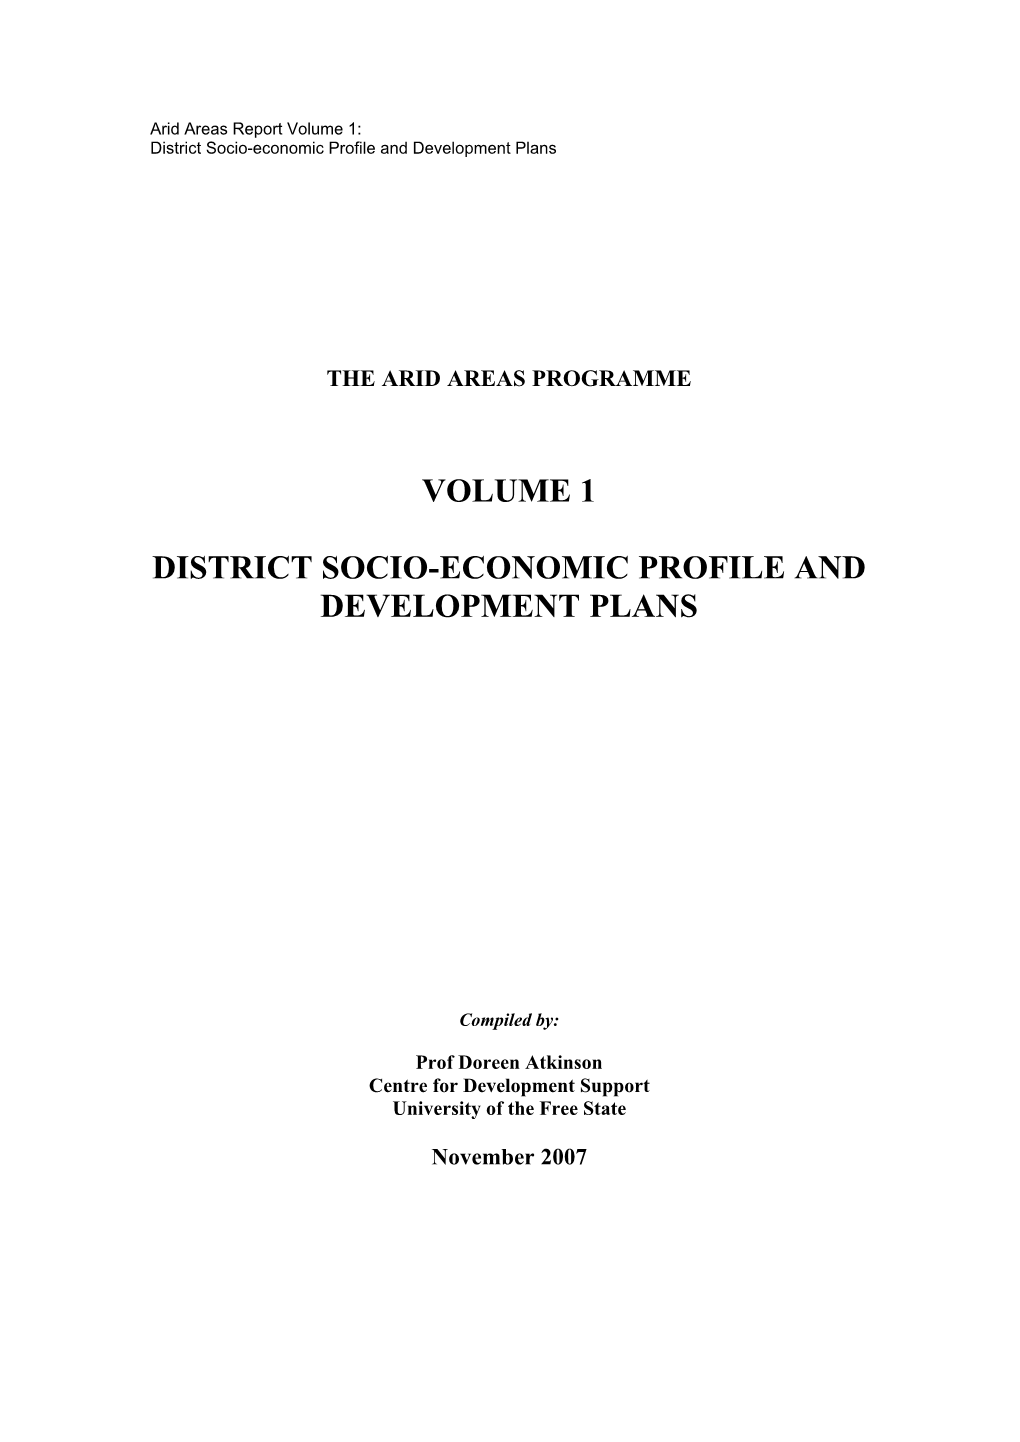 Volume 1 District Socio-Economic Profile and Development Plans